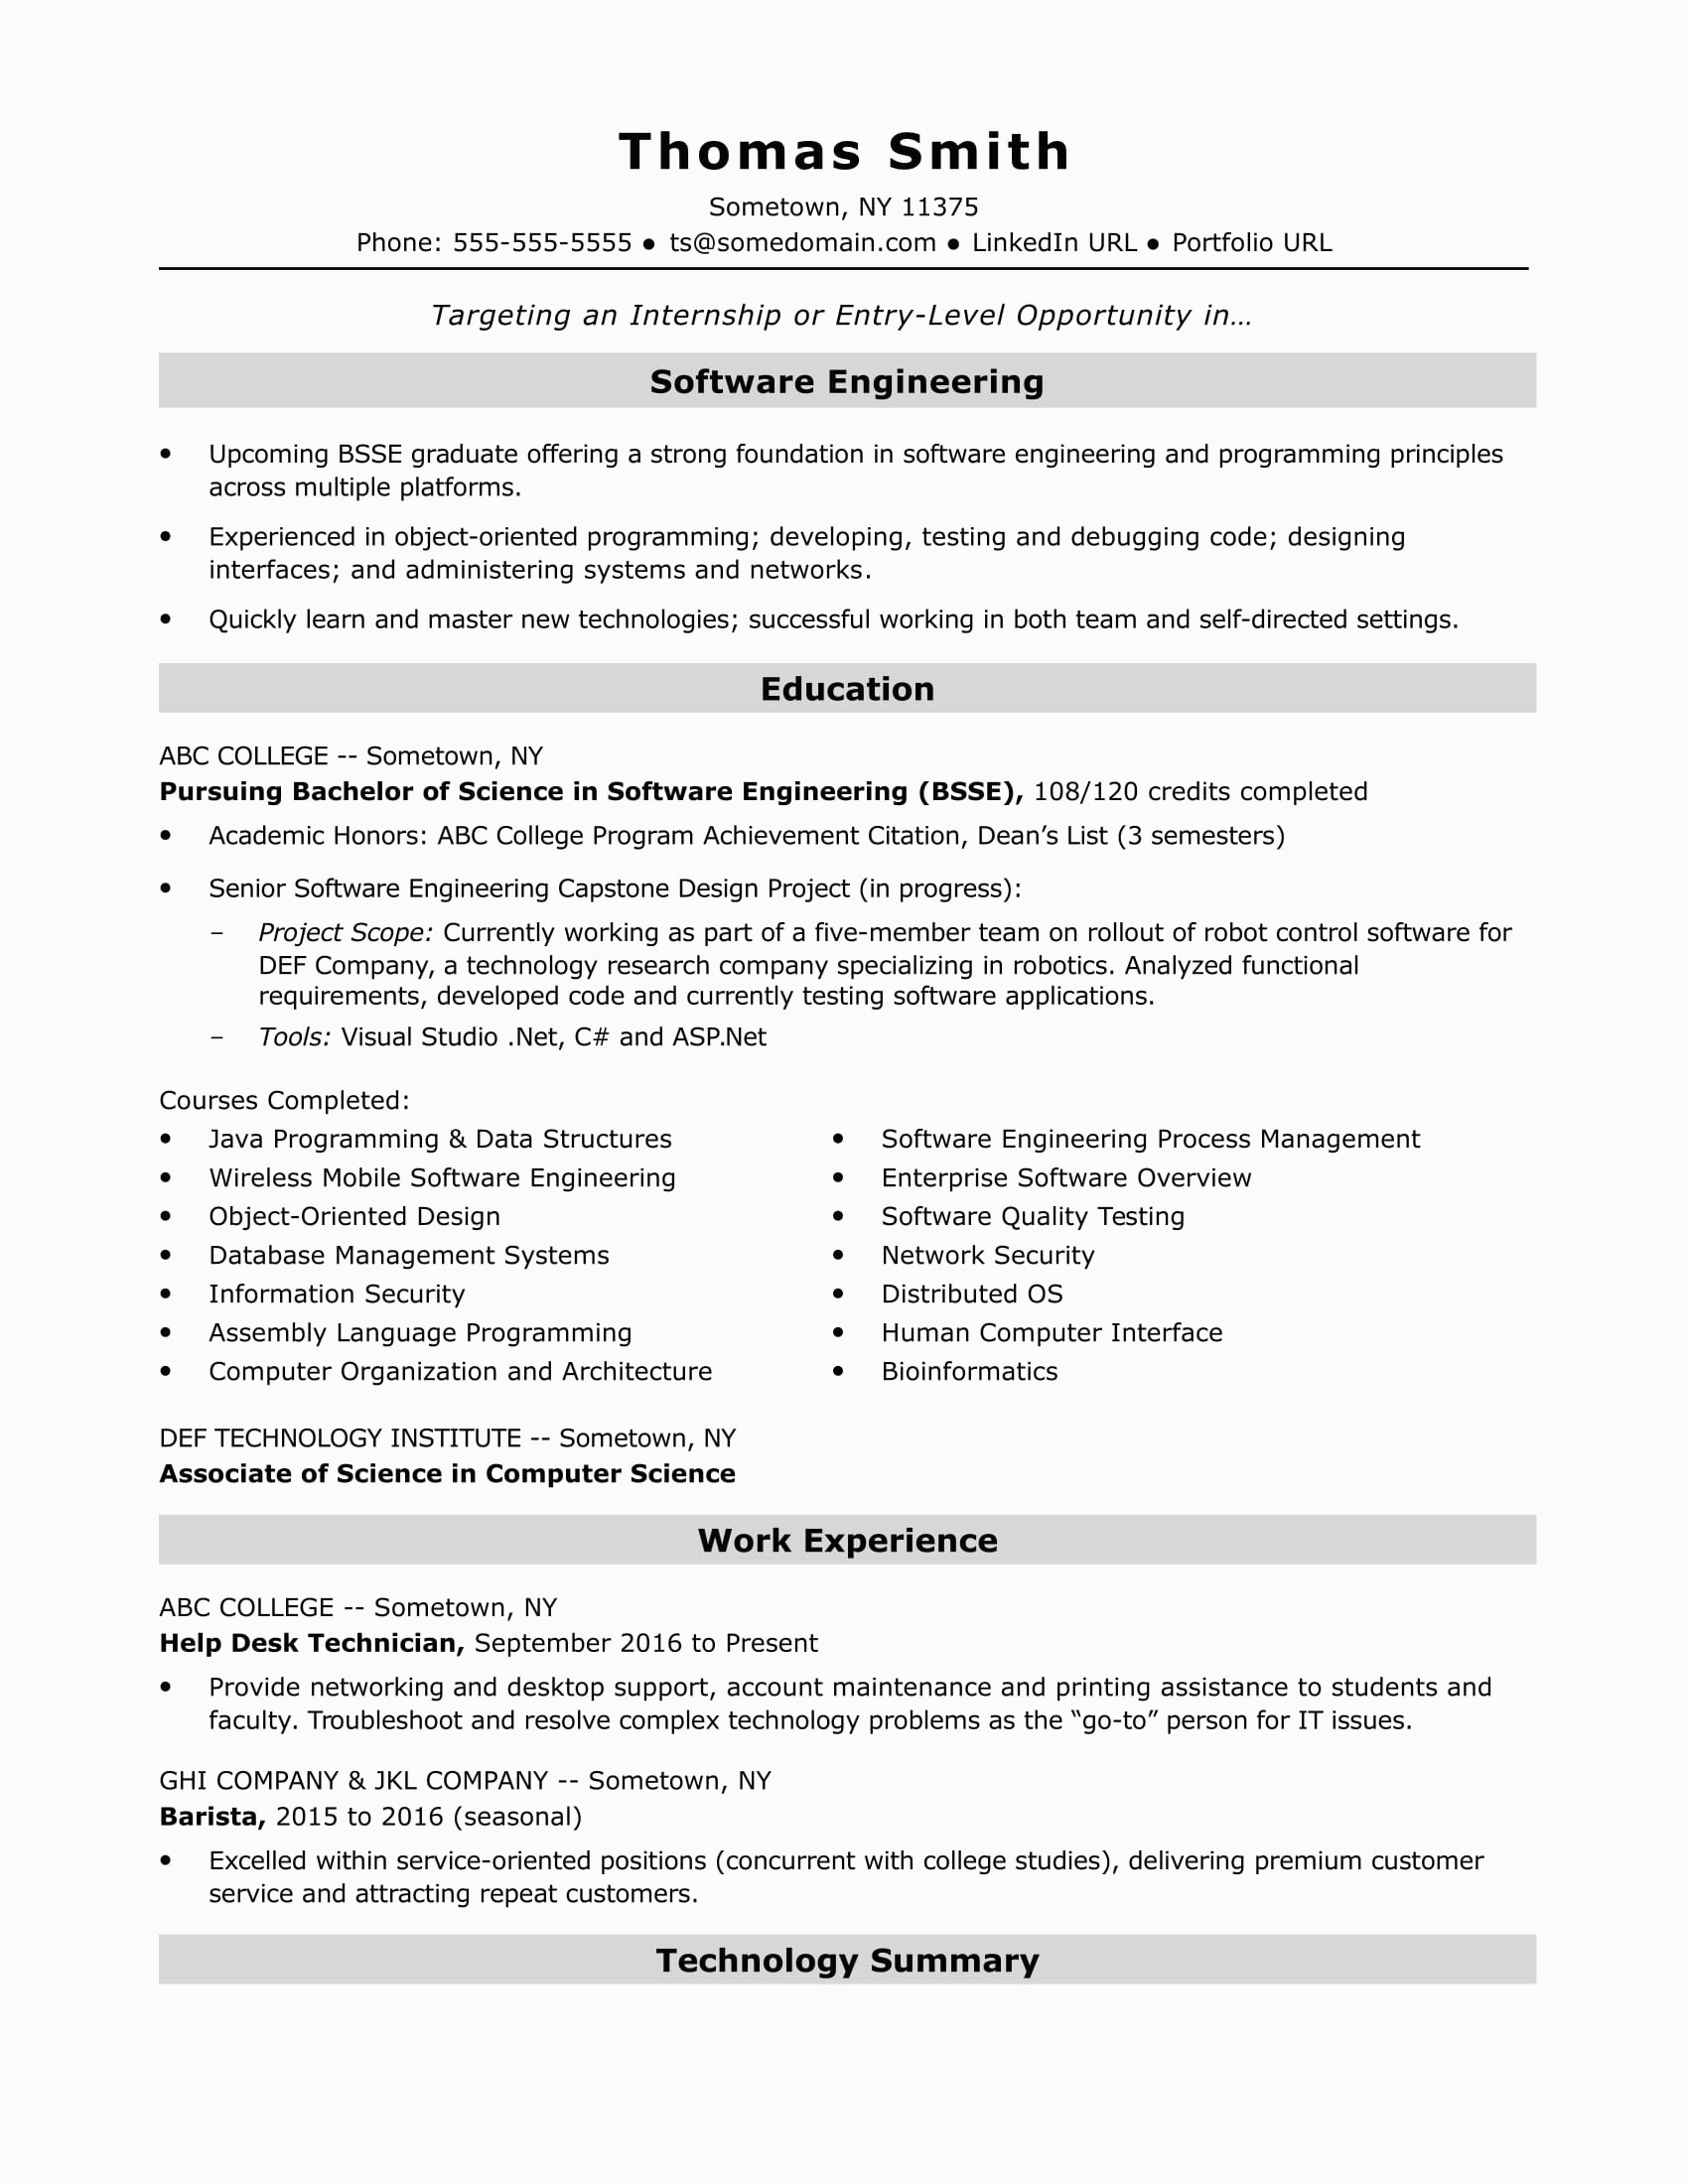 Resume for Computer Job Sample format Entry Level software Engineer Resume Sample